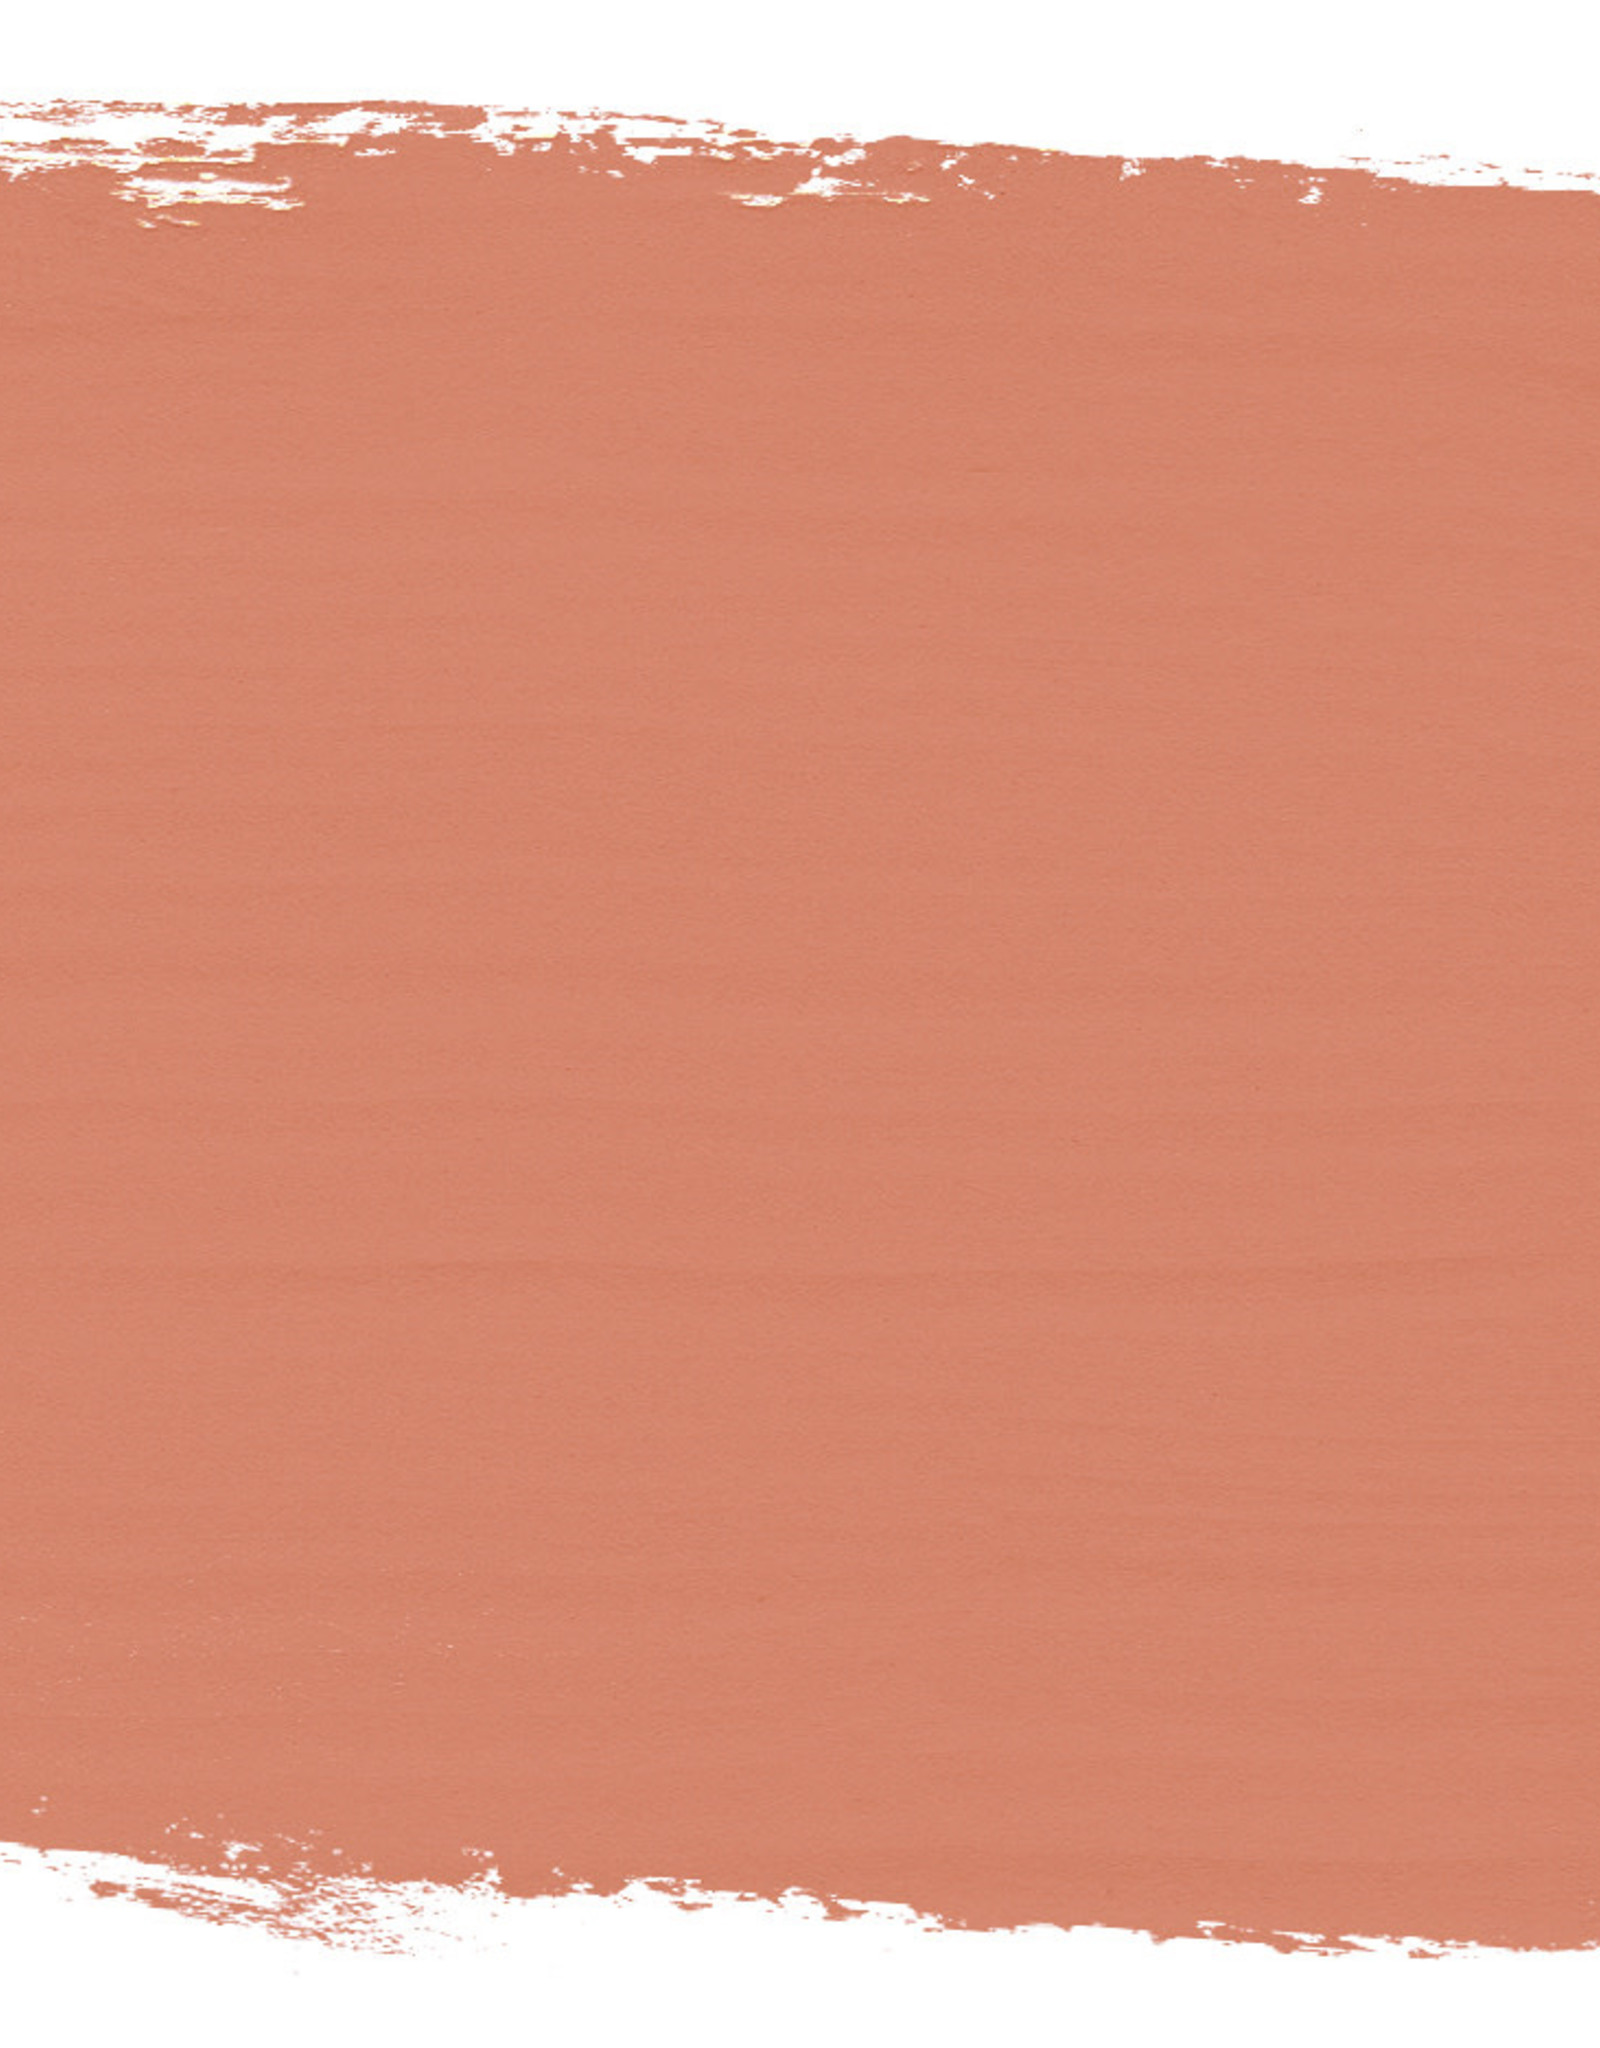 Annie Sloan Scandinavian Pink 1L Chalk Paint® by Annie Sloan